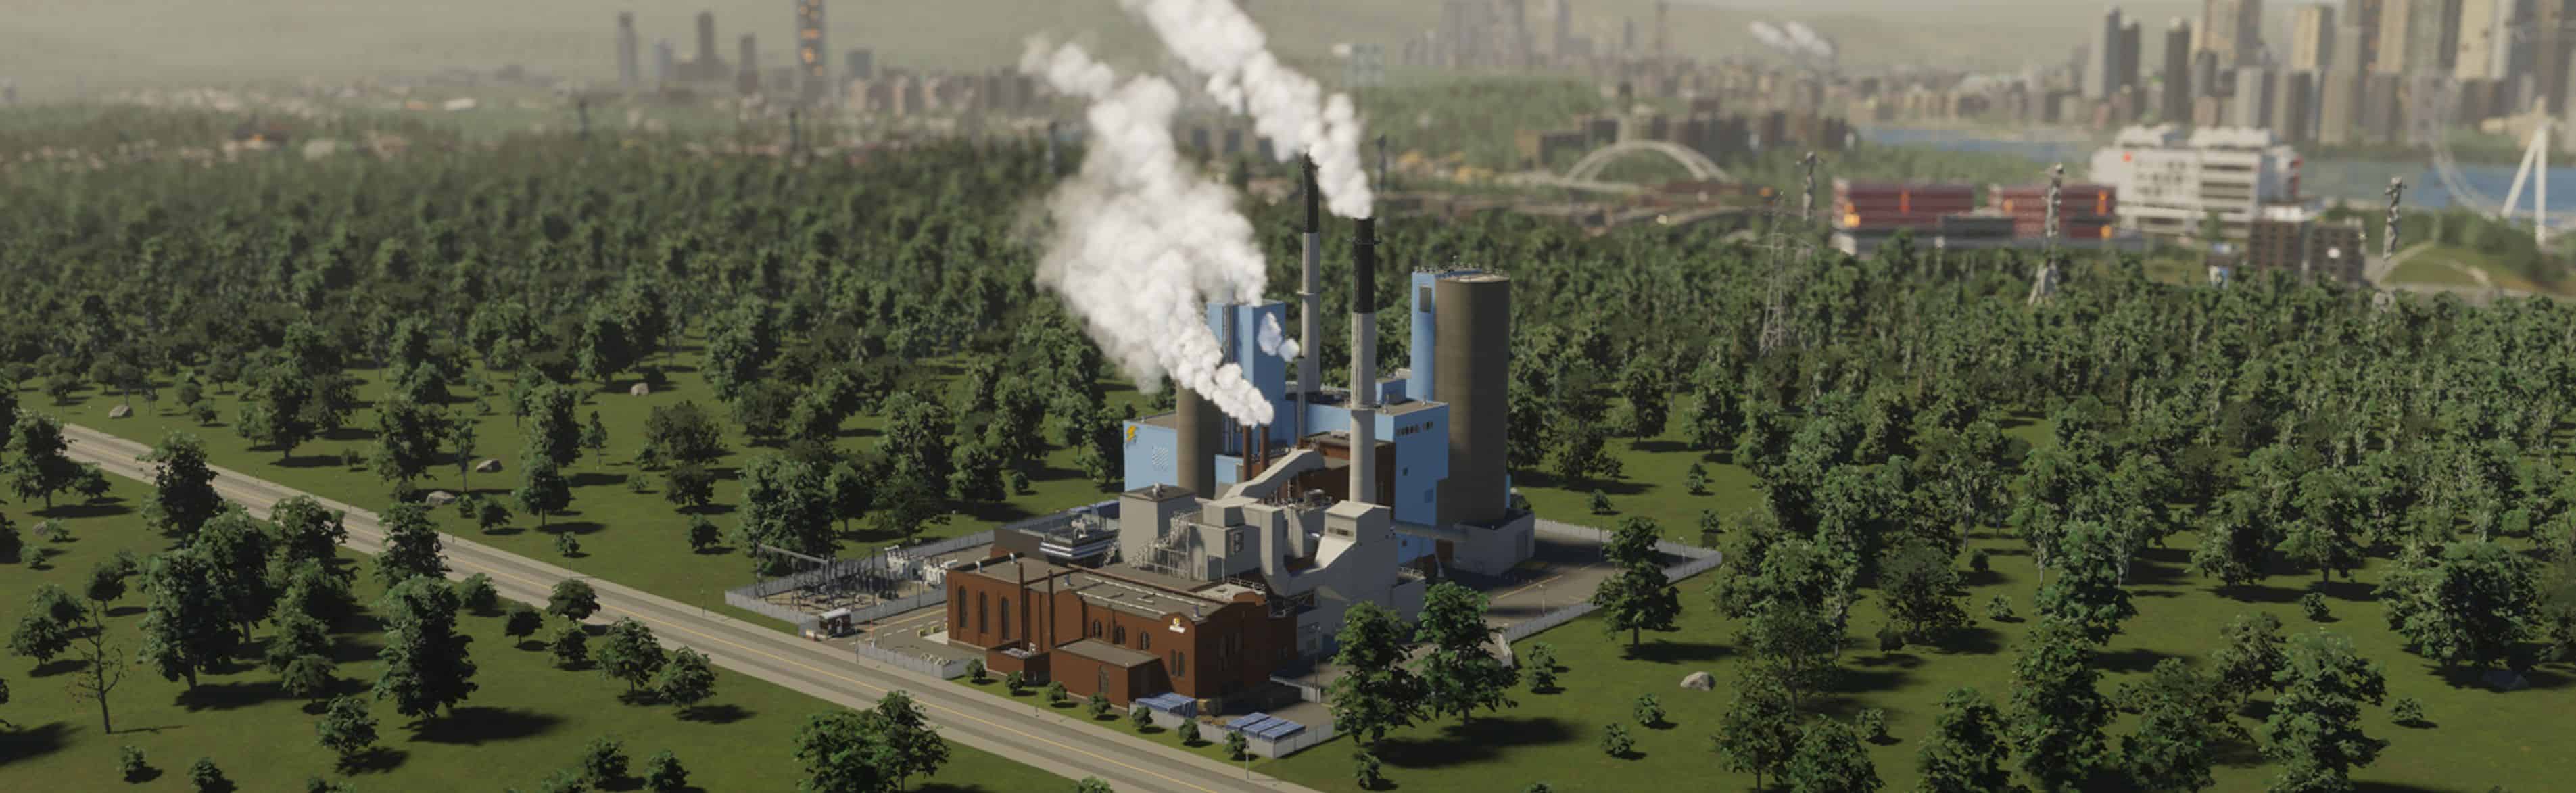 Cities Skylines 2: Coal Power Plant, Gas Power Plant | Cities: Skylines ...